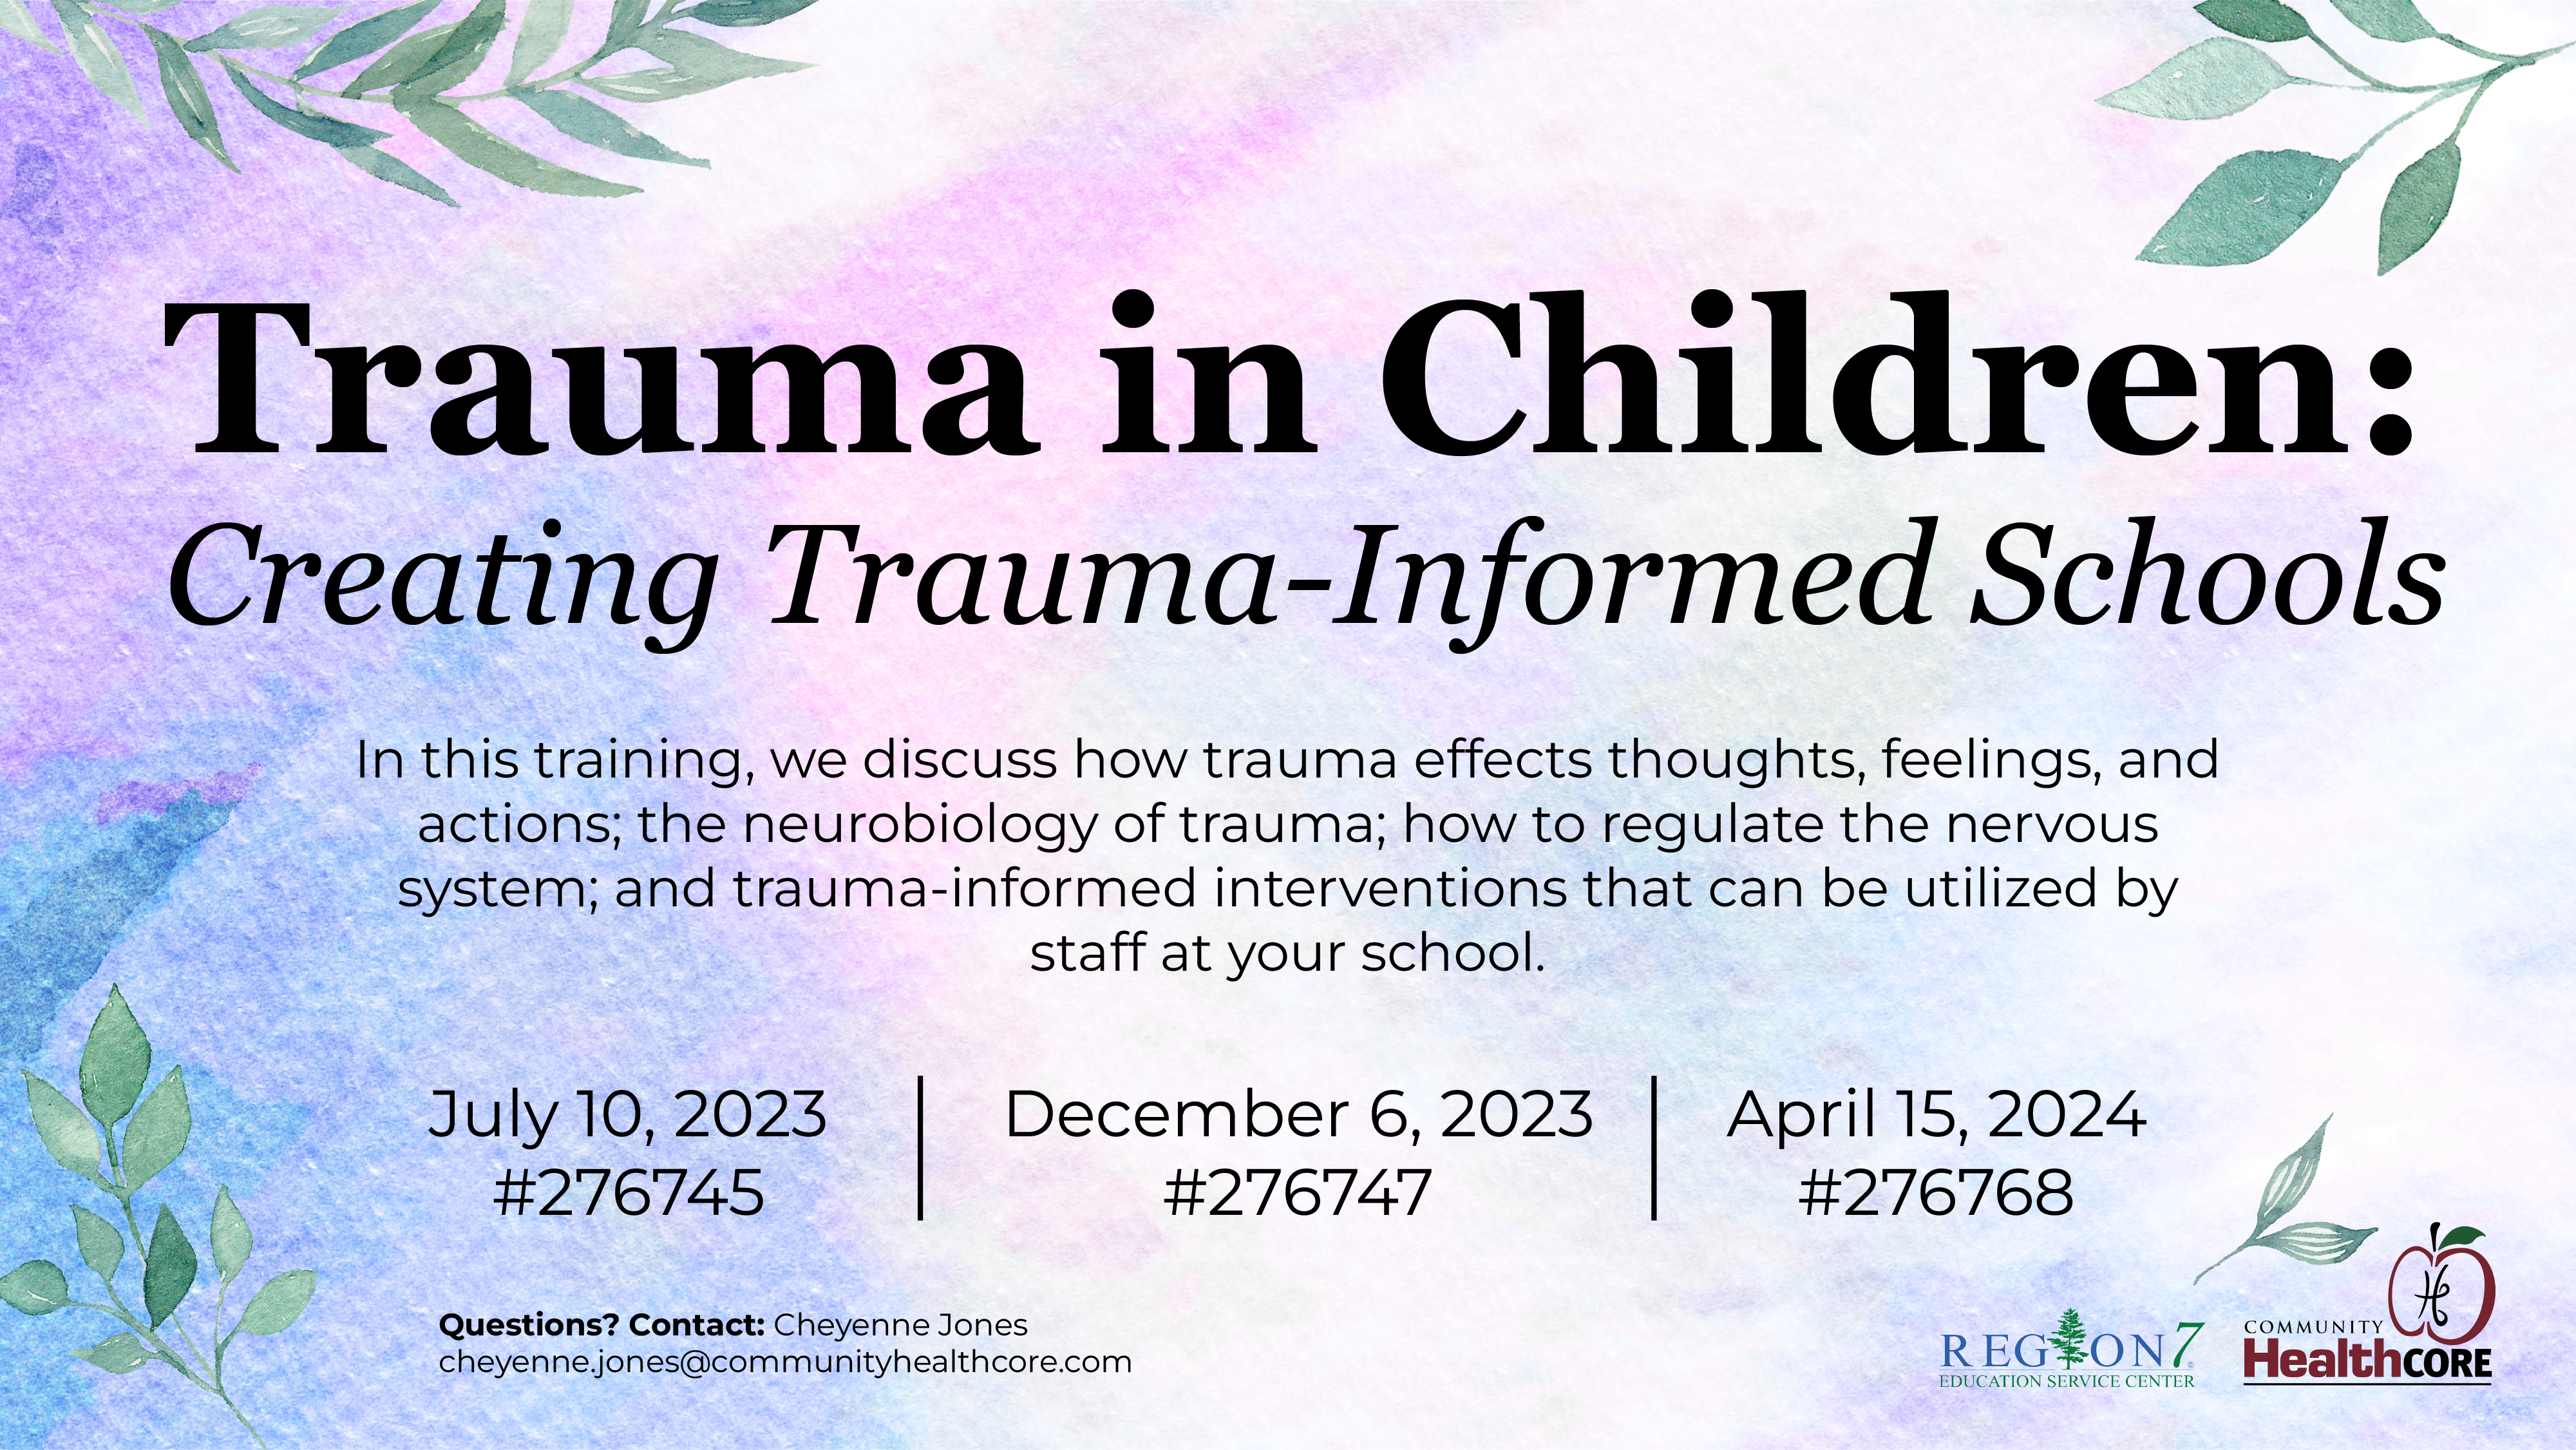 Trauma in Children: Creating Trauma-Informed Schools